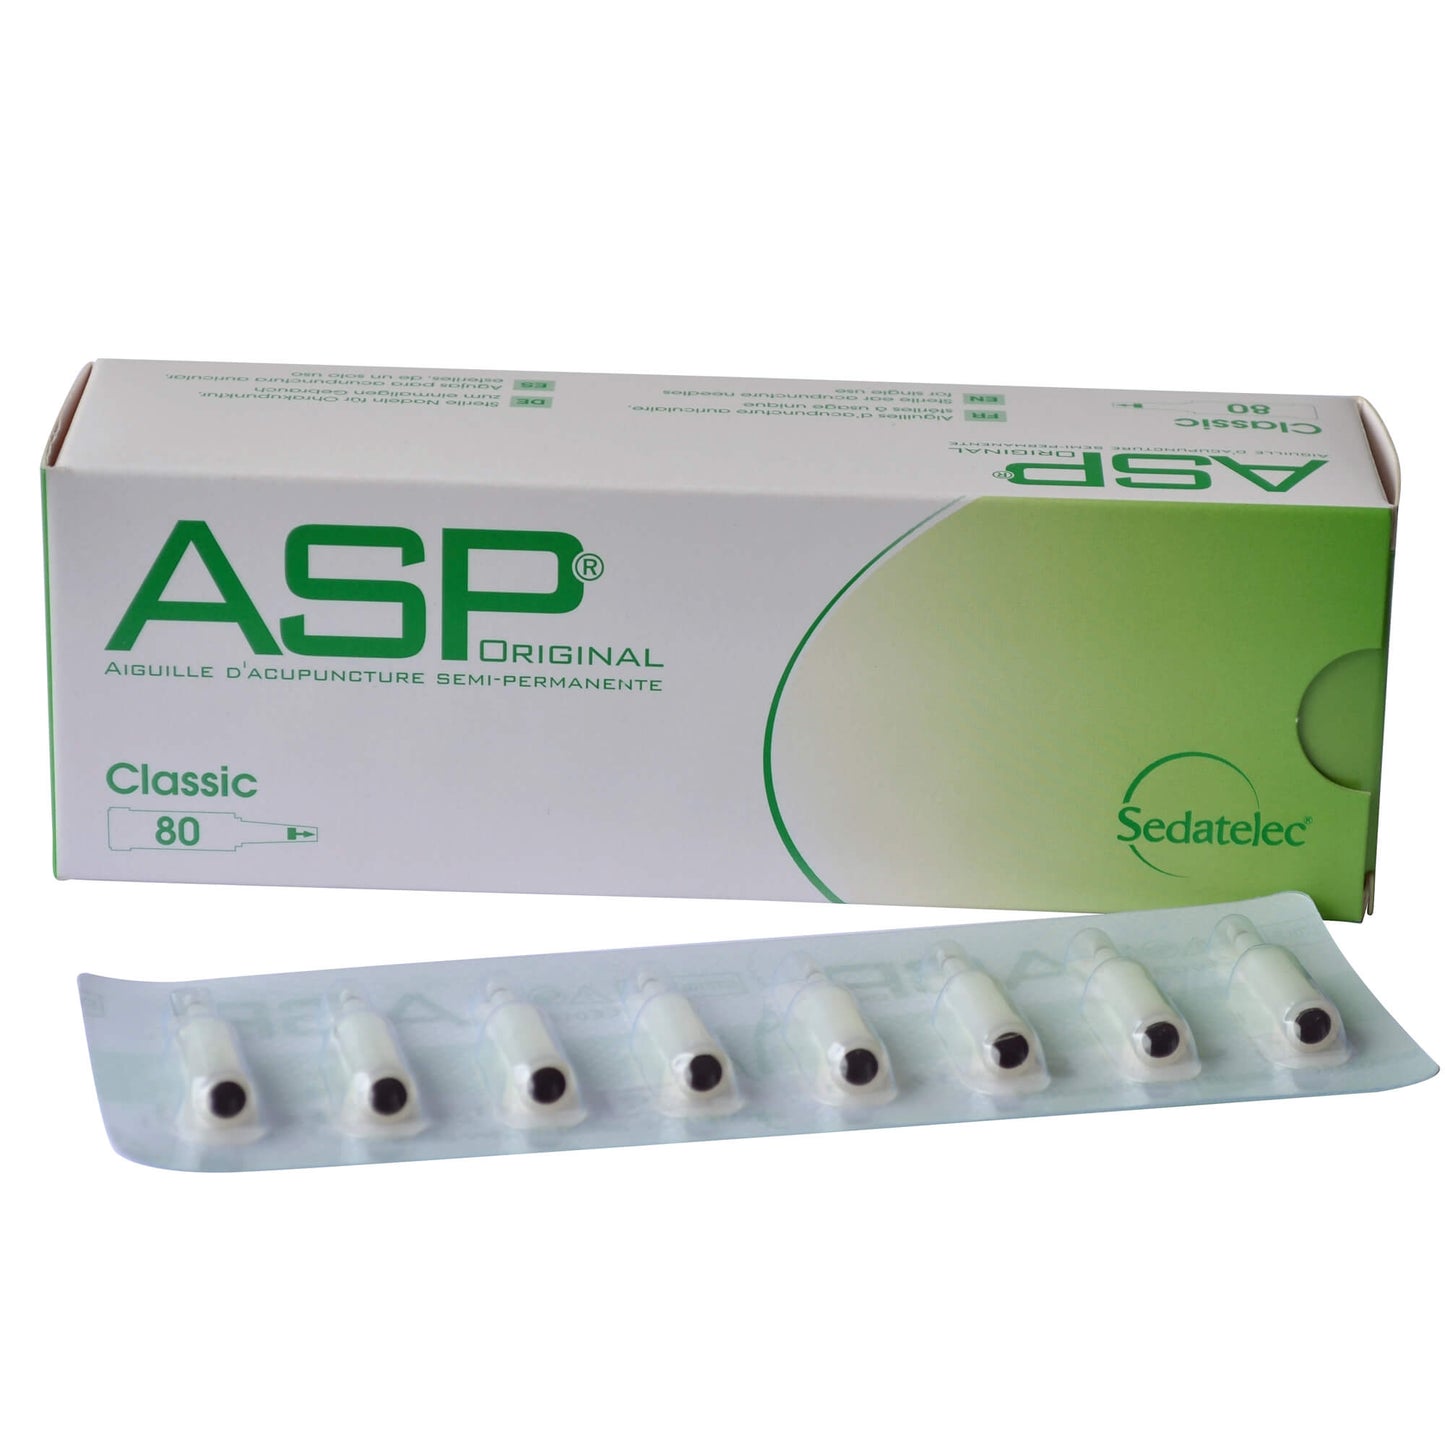 ASP Classic 80 auriculaire